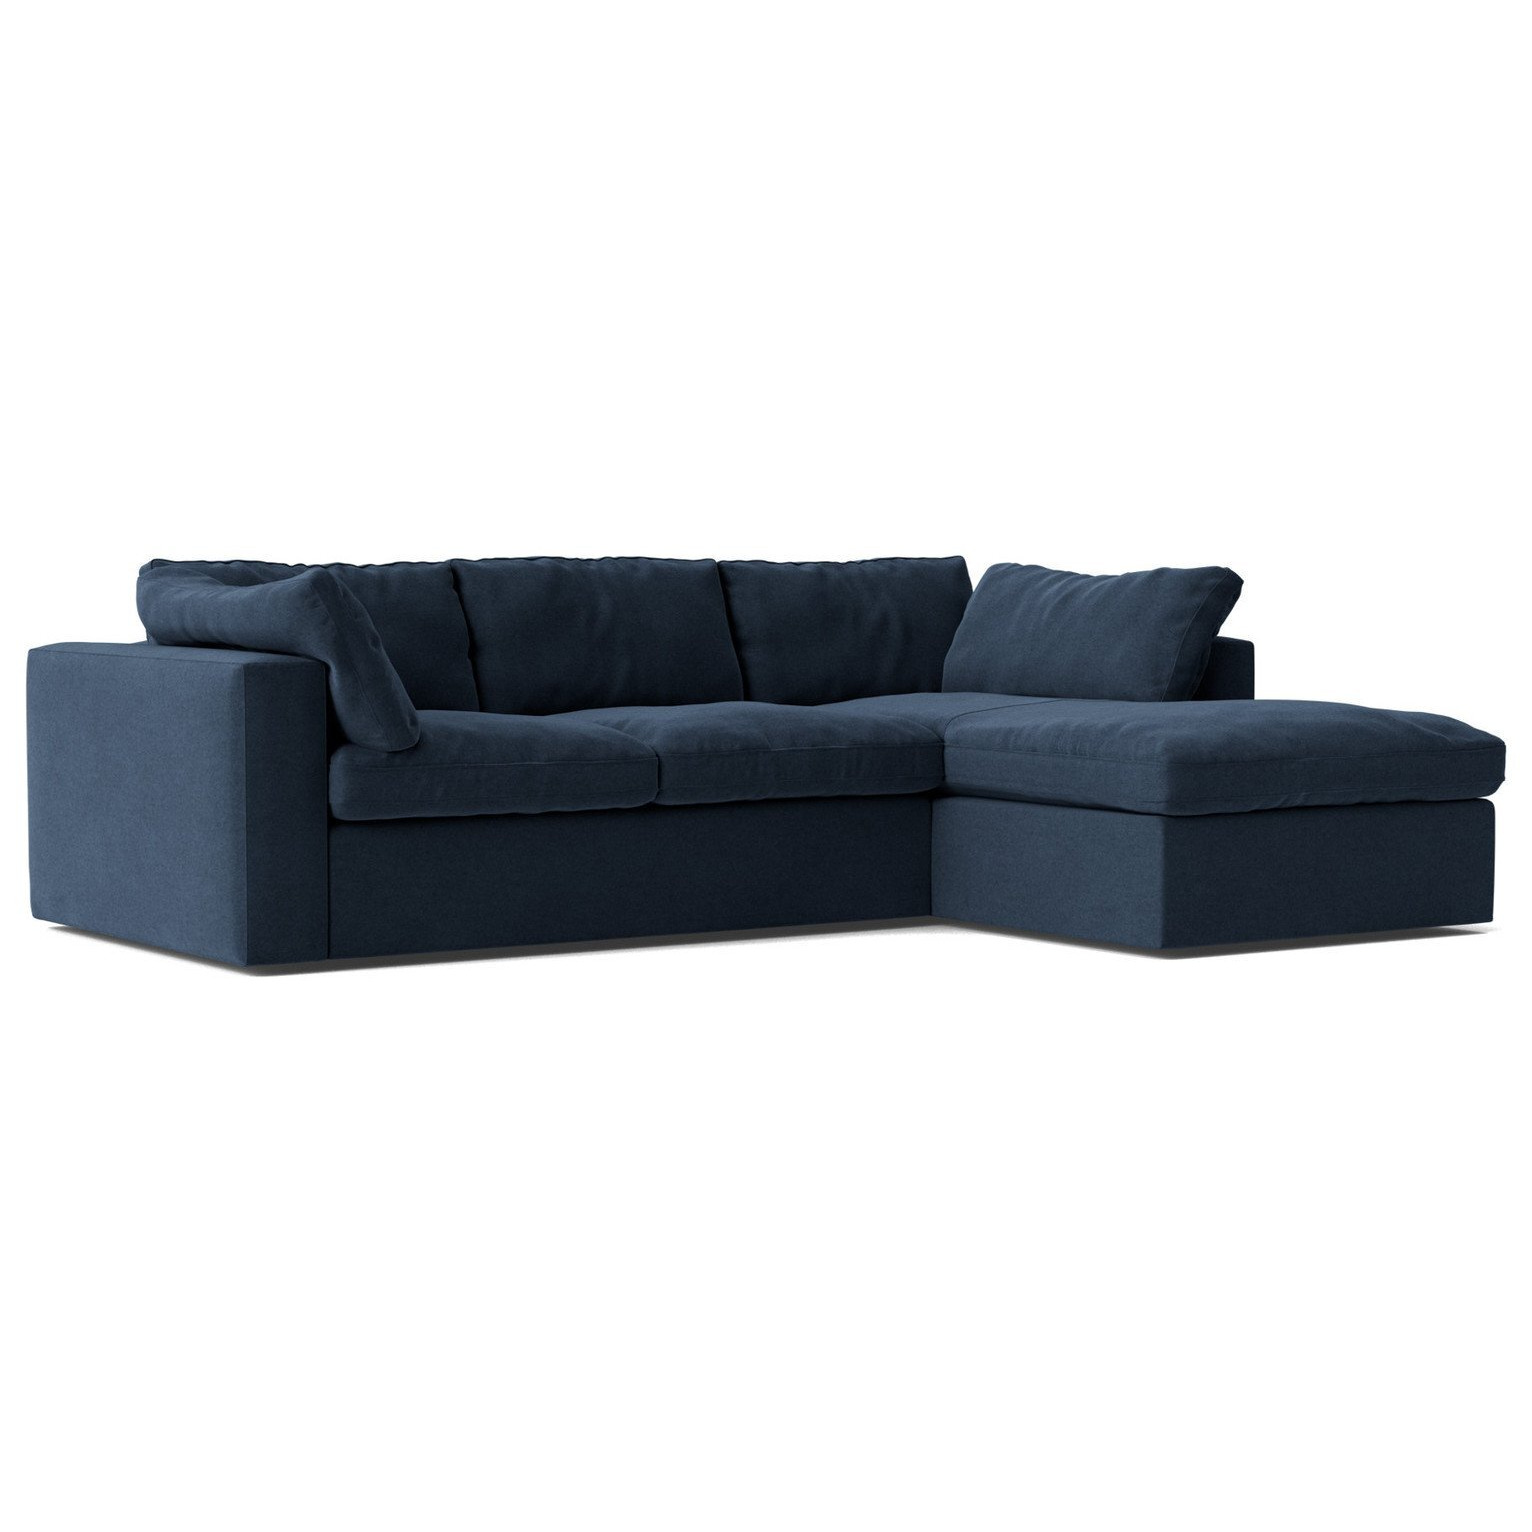 Swoon Seattle Fabric Right Hand Corner Sofa - Indigo Blue - image 1